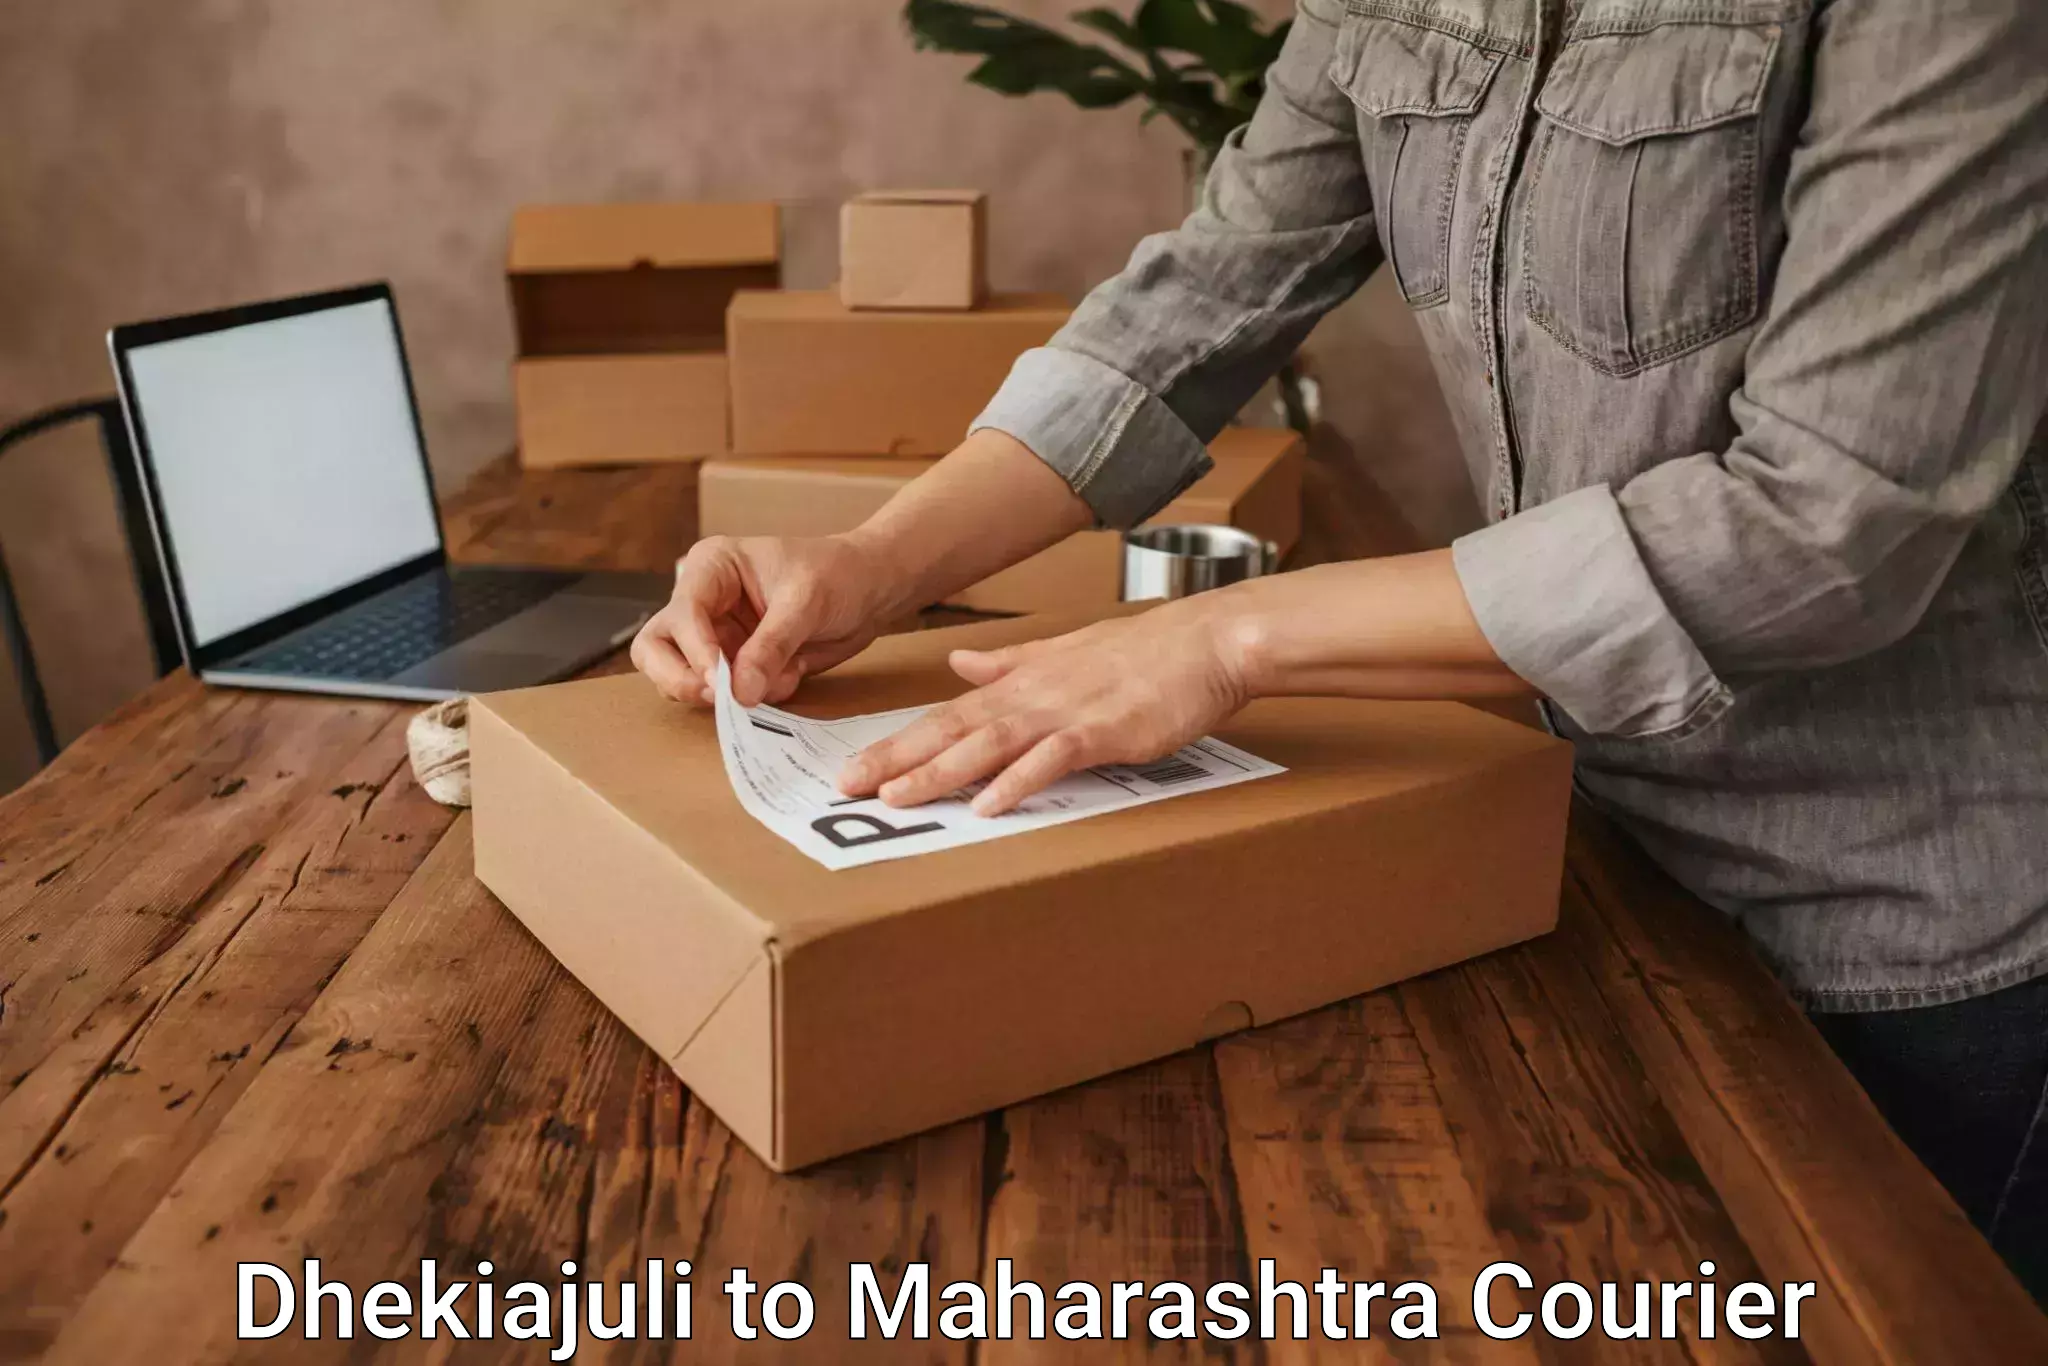 Nationwide delivery network Dhekiajuli to Maharashtra